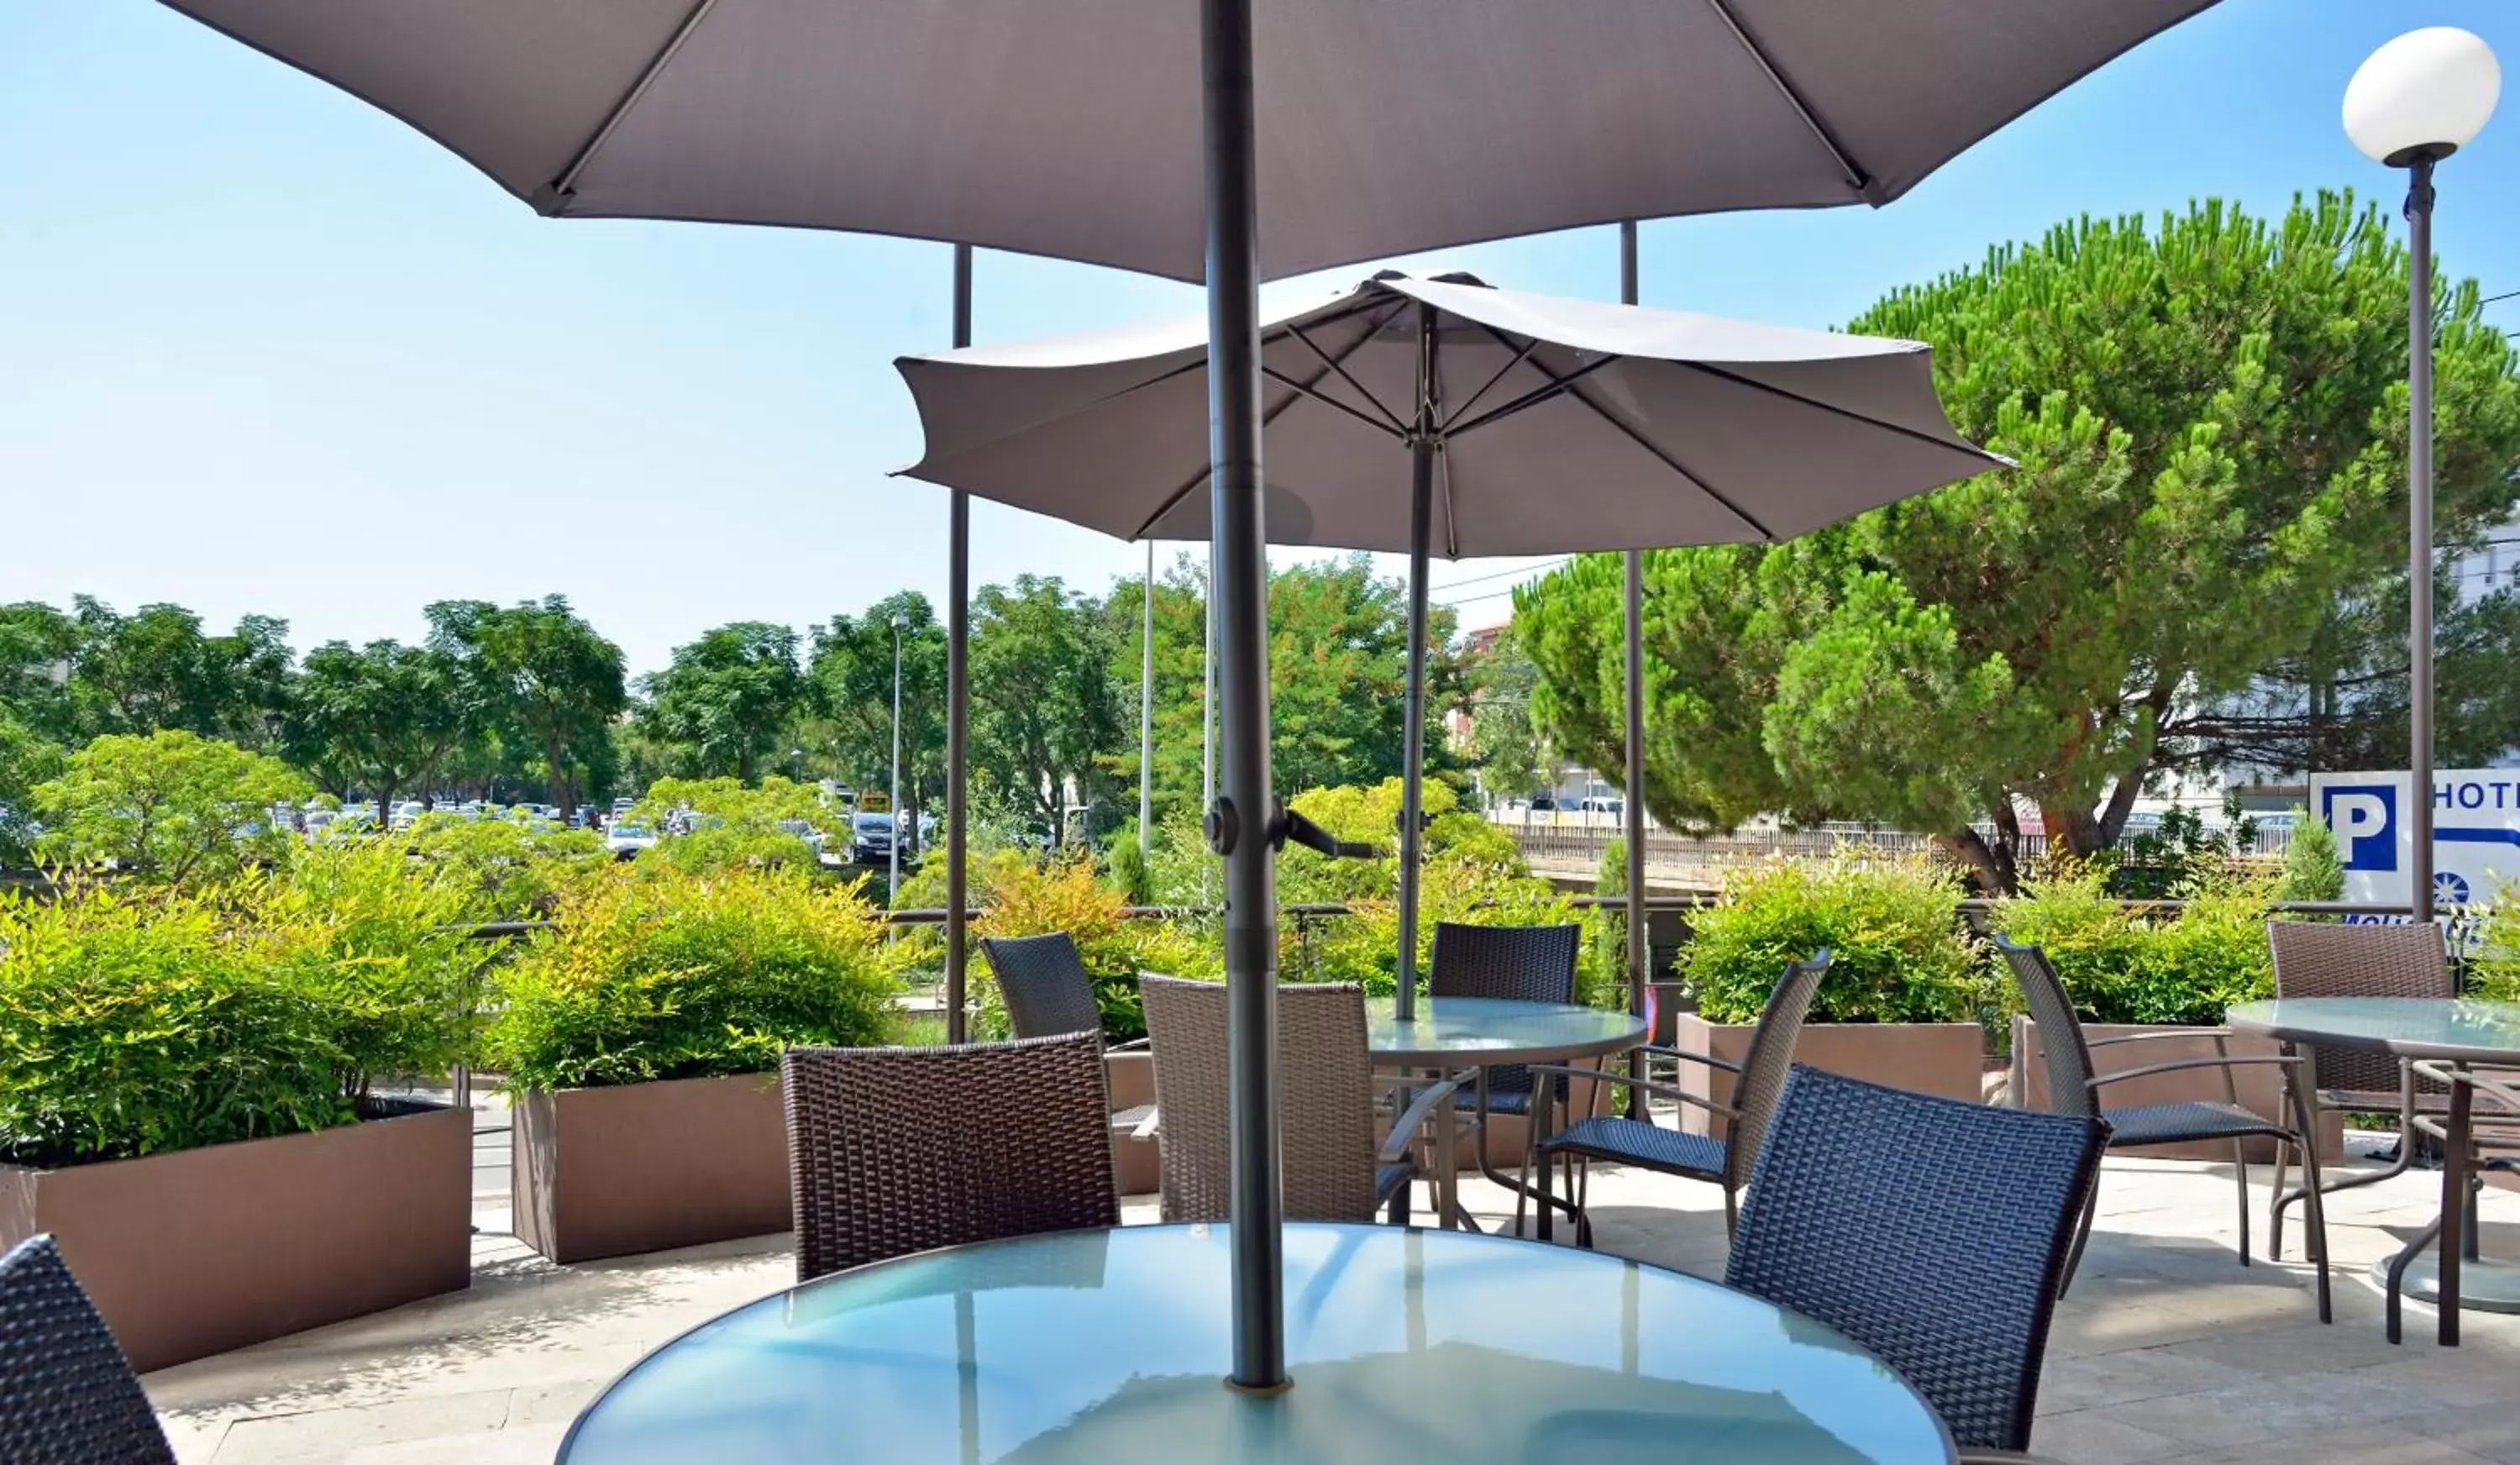 Balcony/Terrace, Patio/Outdoor Area in Best Western Premier CMC Girona